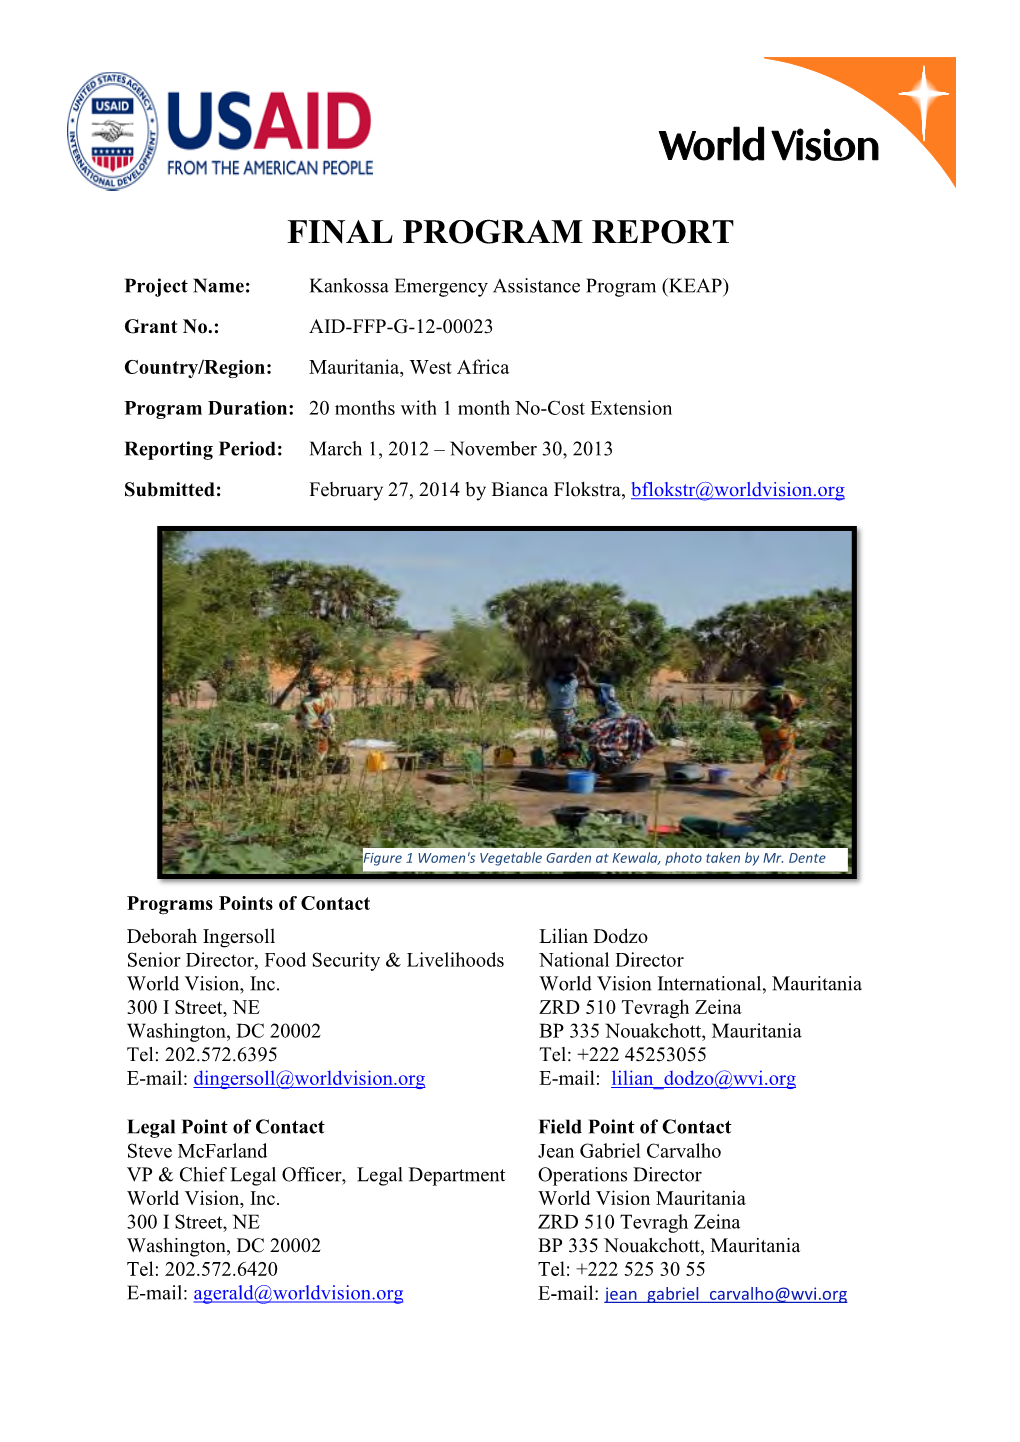 Final Program Report